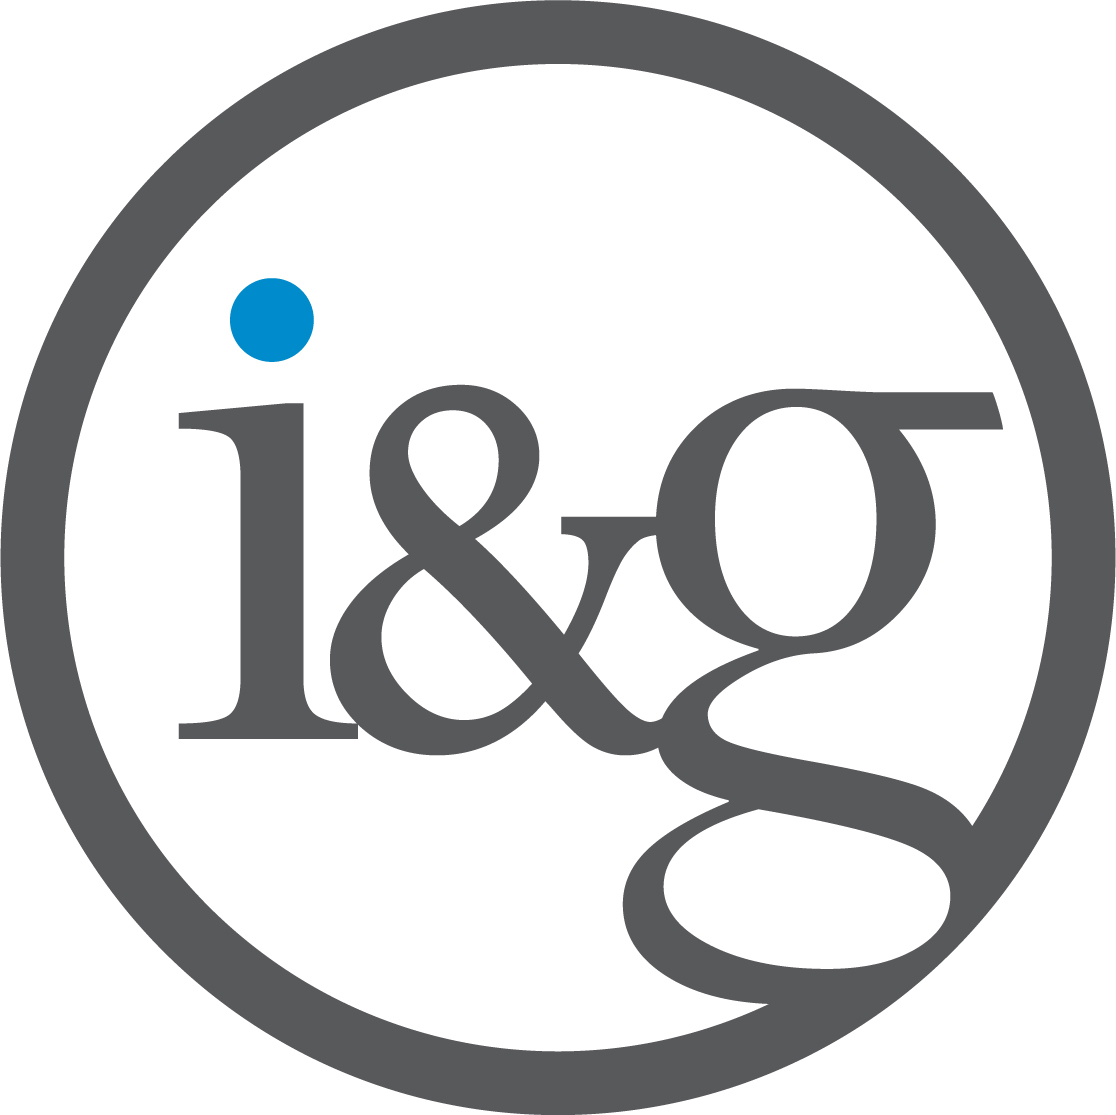 I&G Ltd logo